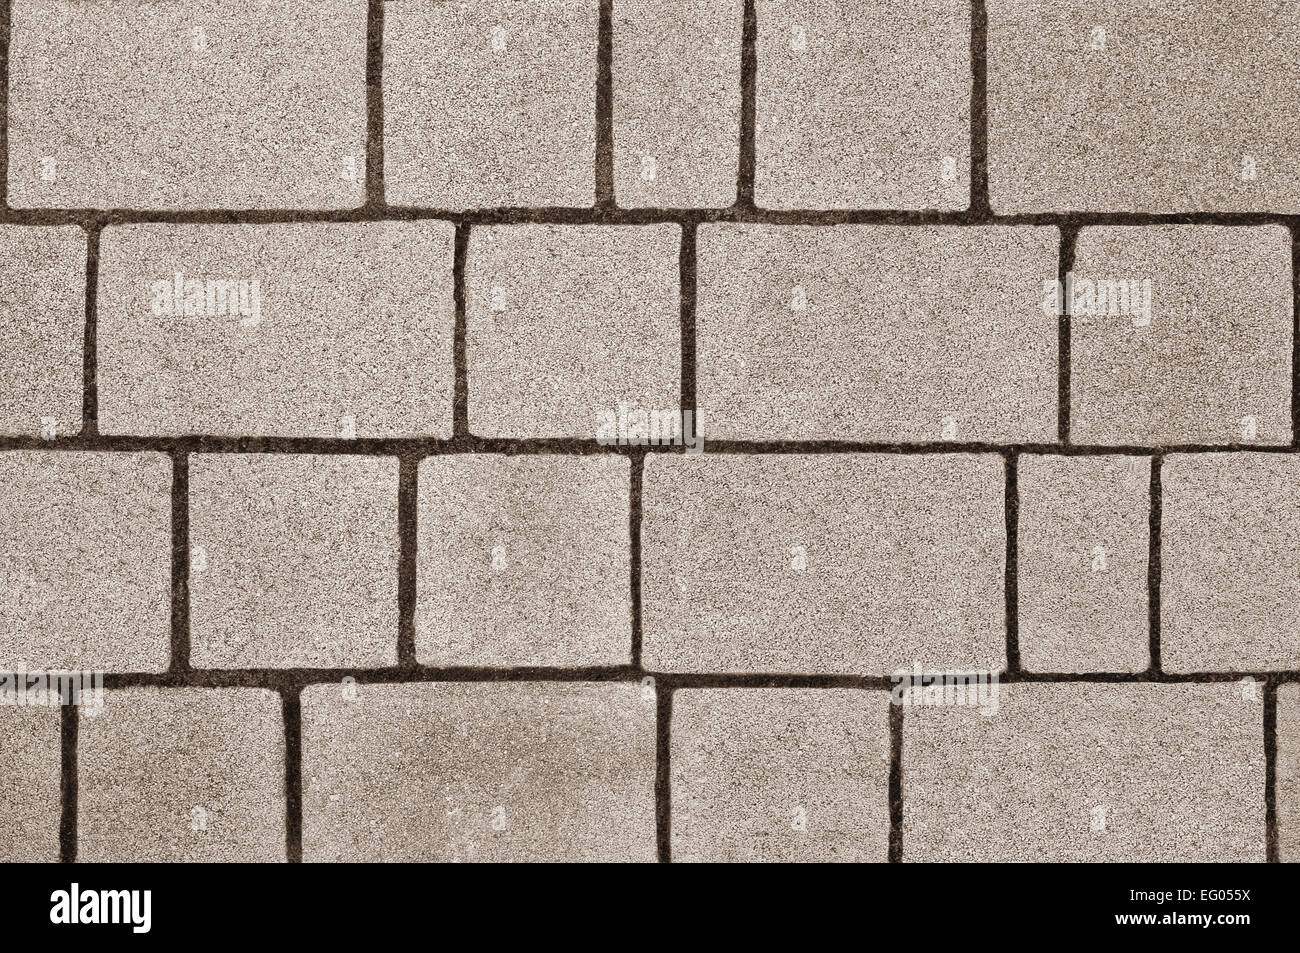 Block paving texture Stock Photo